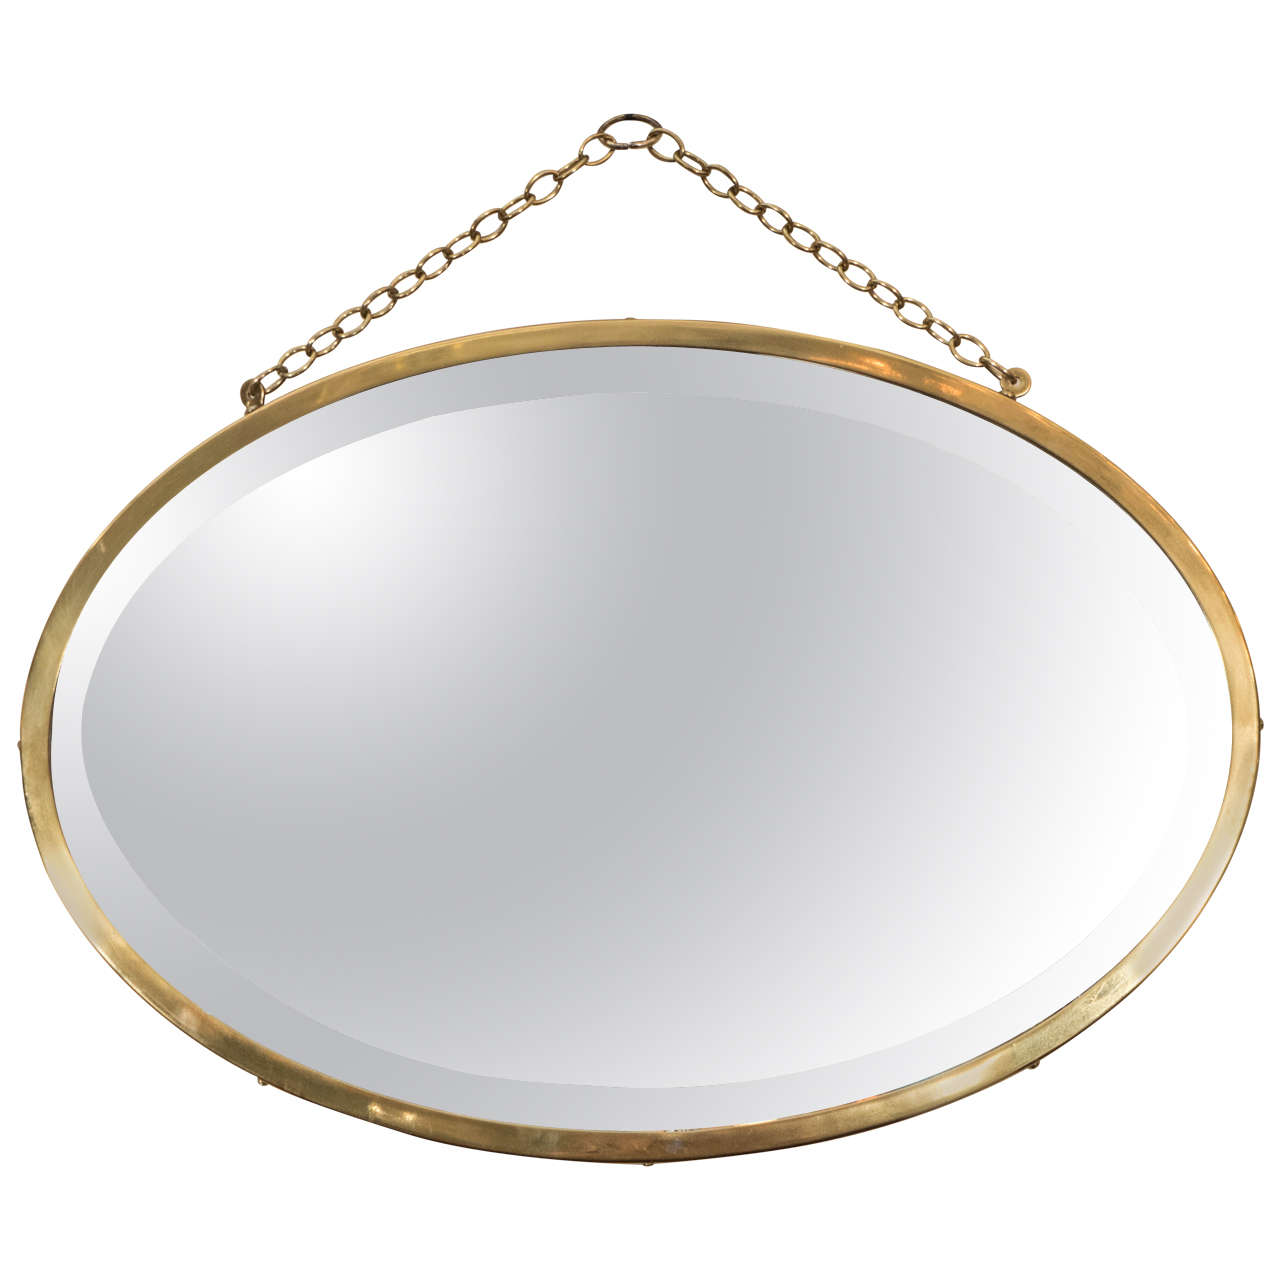 Midcentury Oval Brass Framed Beveled Glass Wall Mirror